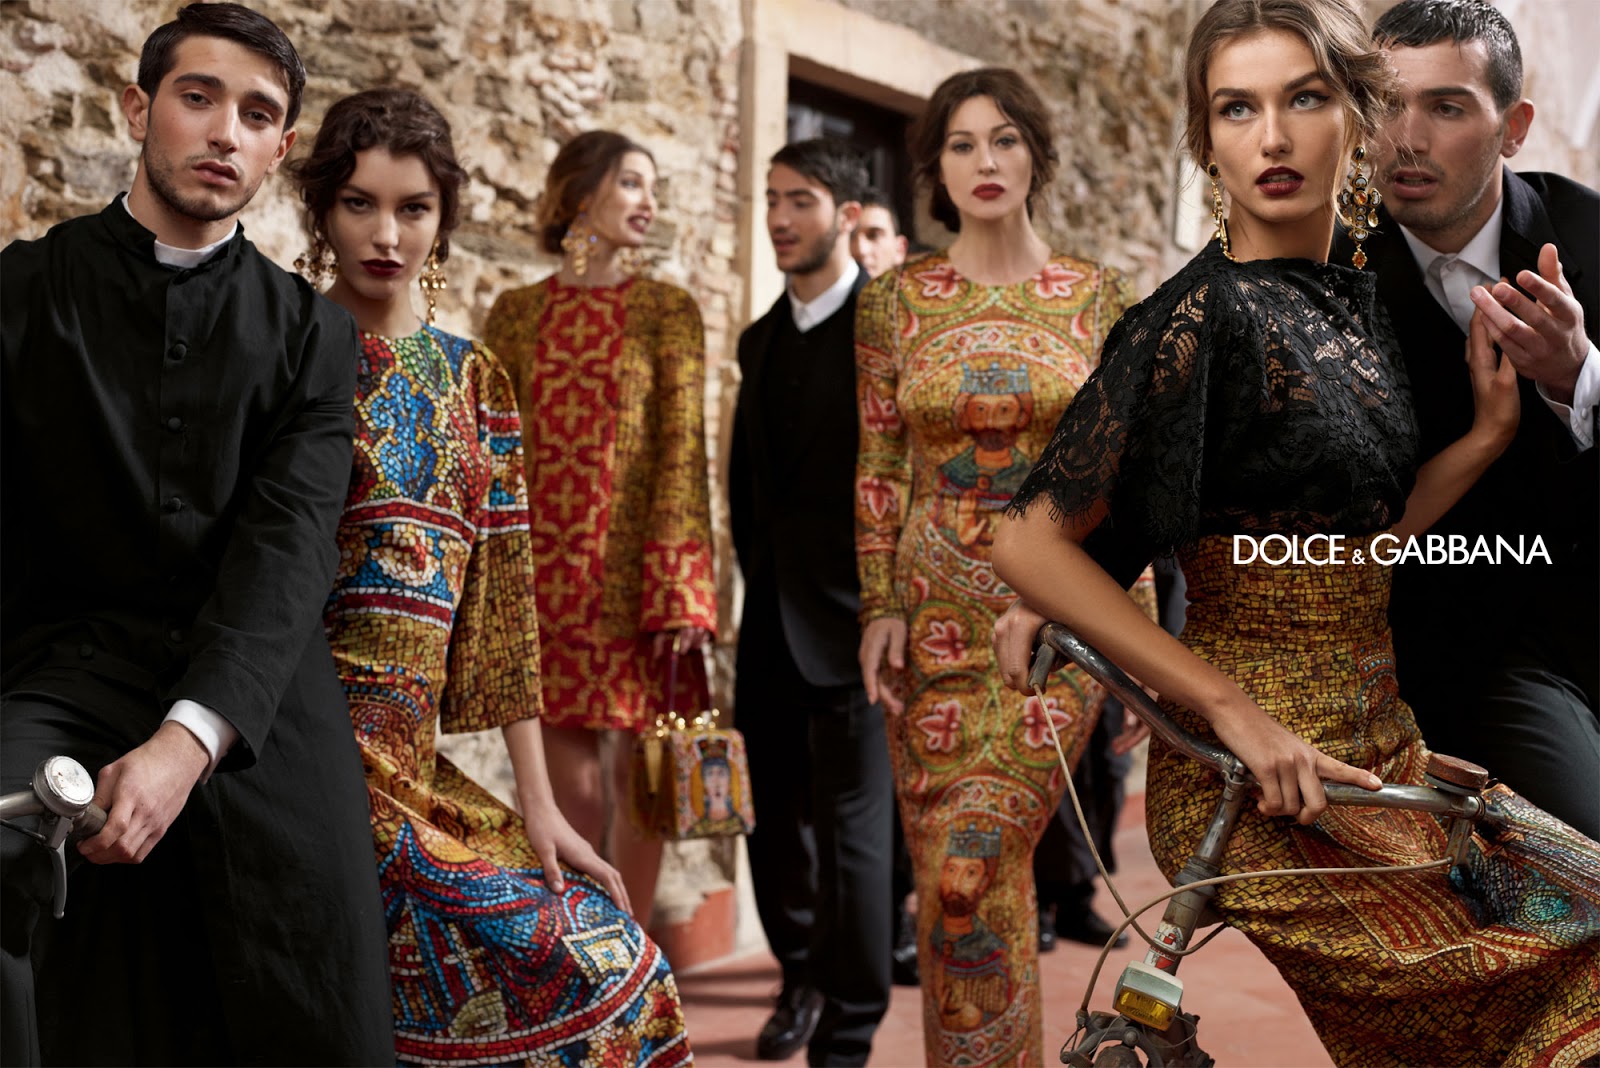 sembrono: Dolce Gabbana dress collection 2014,2013 SHORT DRESS DOLCE